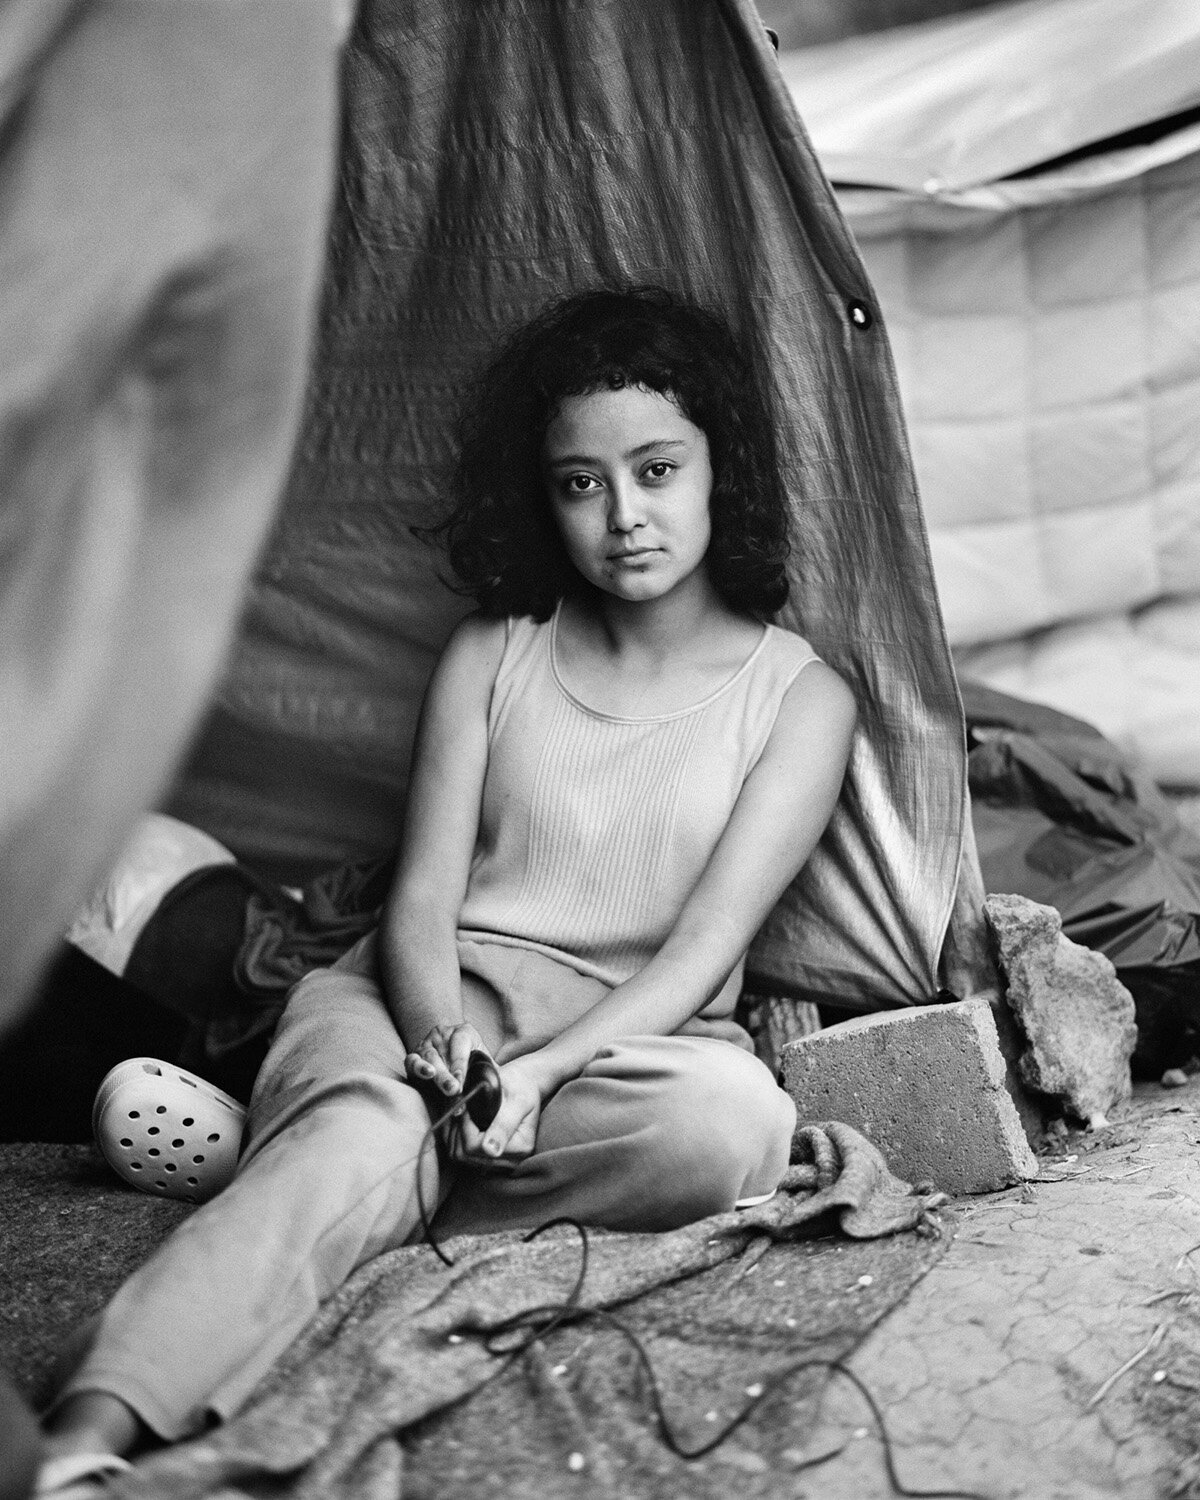  Stephany Solano, 17, from Guatemala, at an informal migrant camp in Reynosa, Mexico. Photograph by Stephany Solano and Adam Ferguson 